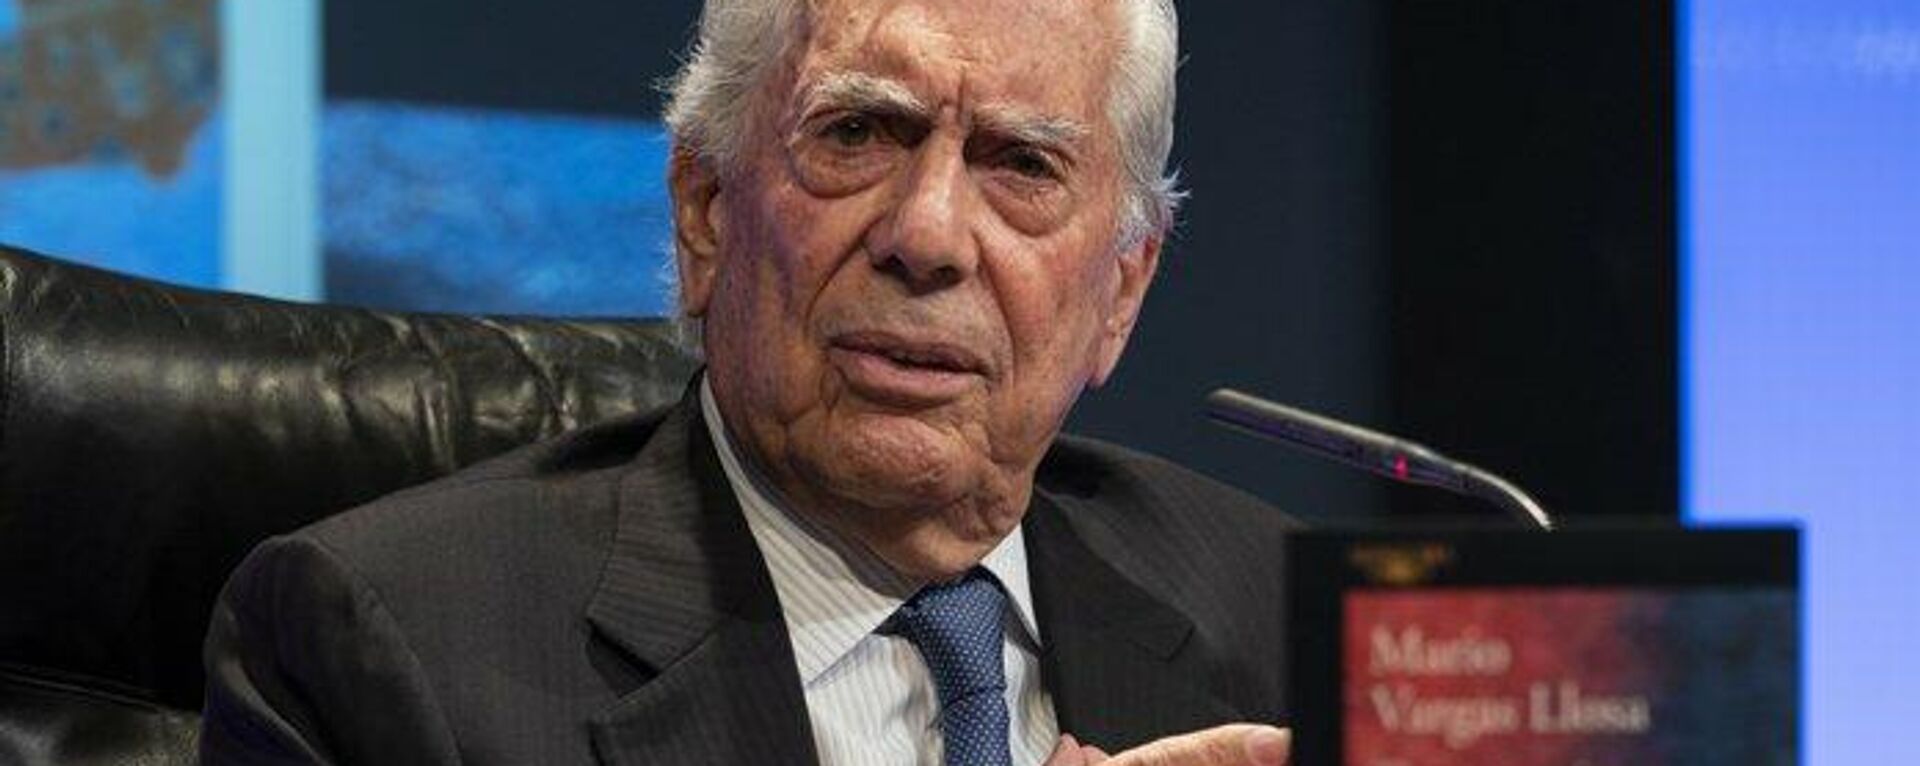 Mario Vargas Llosa, escritor peruano.  - Sputnik Mundo, 1920, 09.12.2022